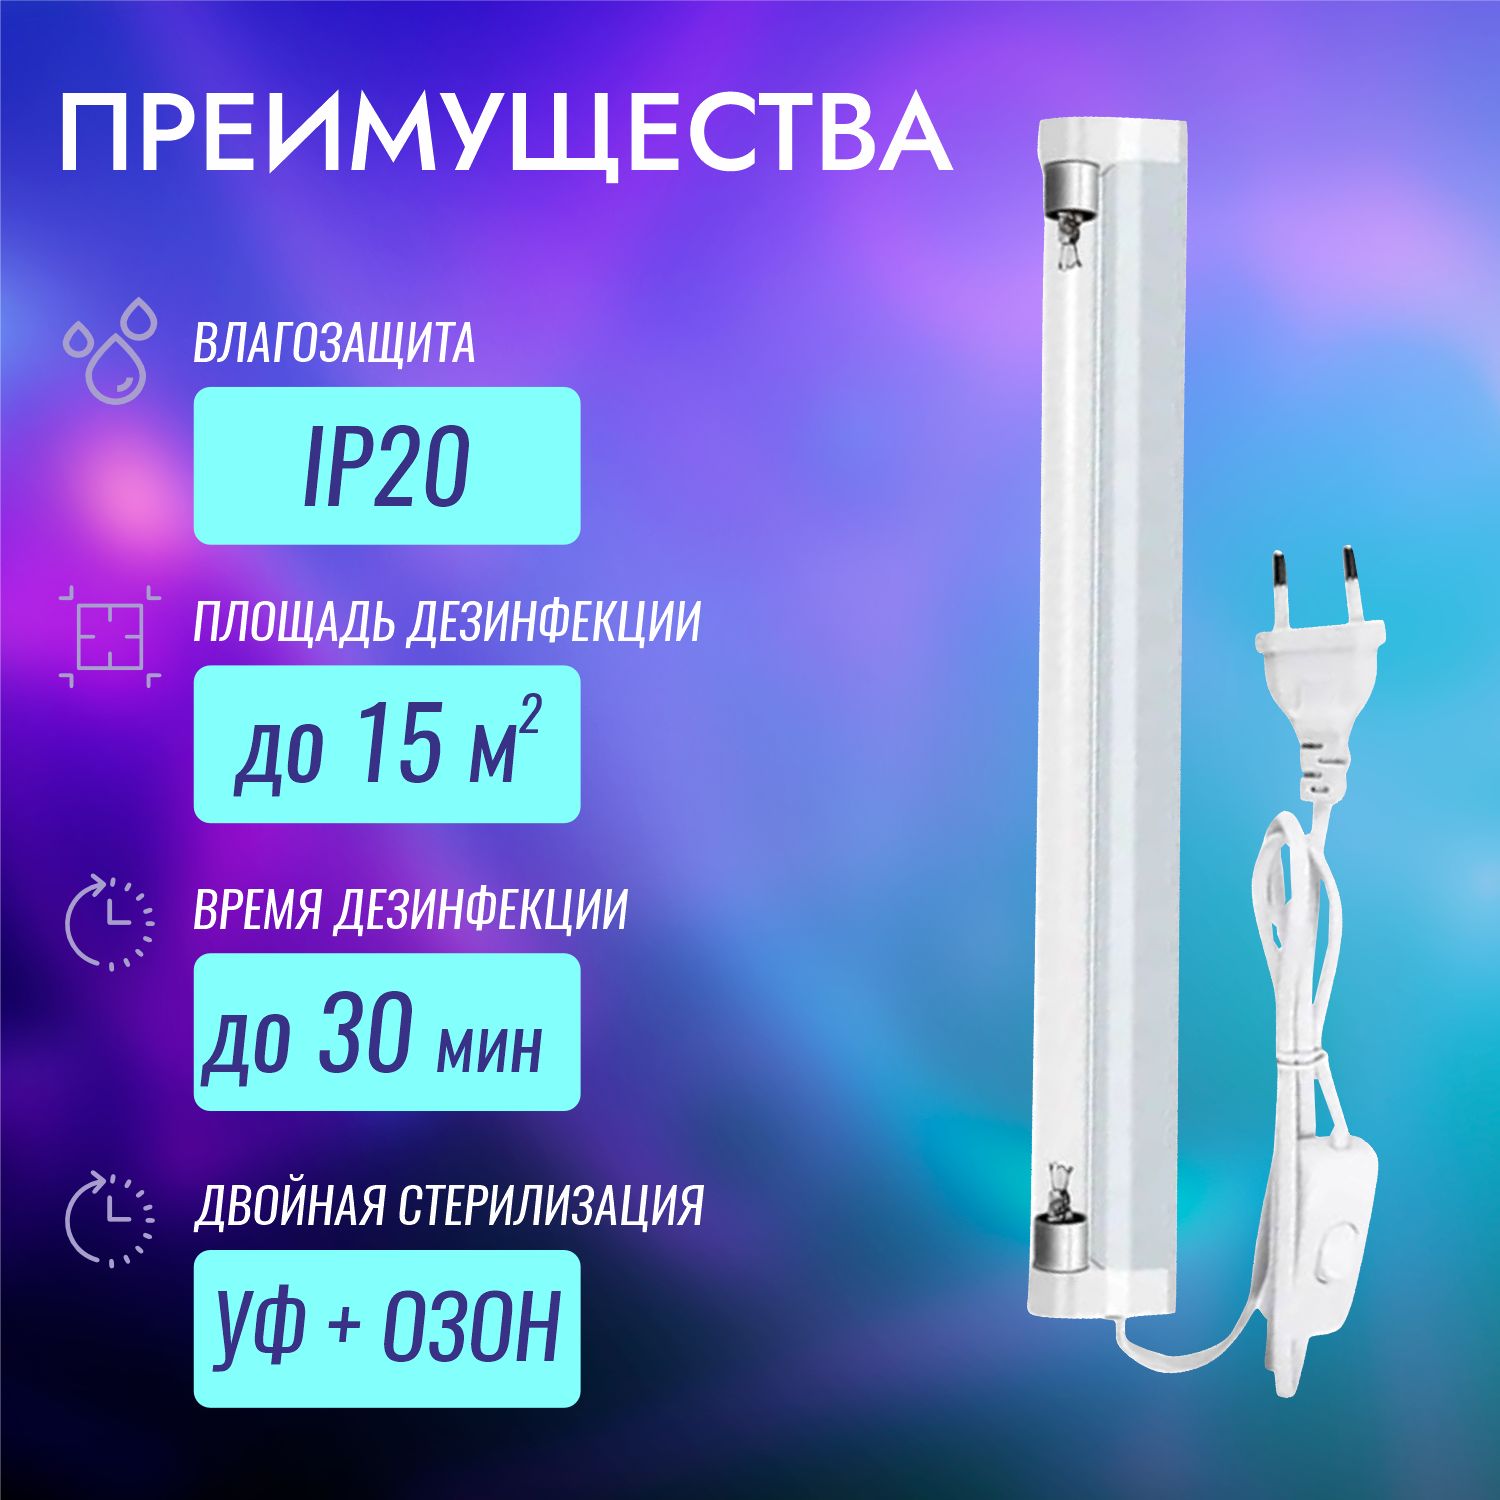 Ультрафиолетовая бактерицидная лампа 8Вт УФ + Озон,  лампа для .